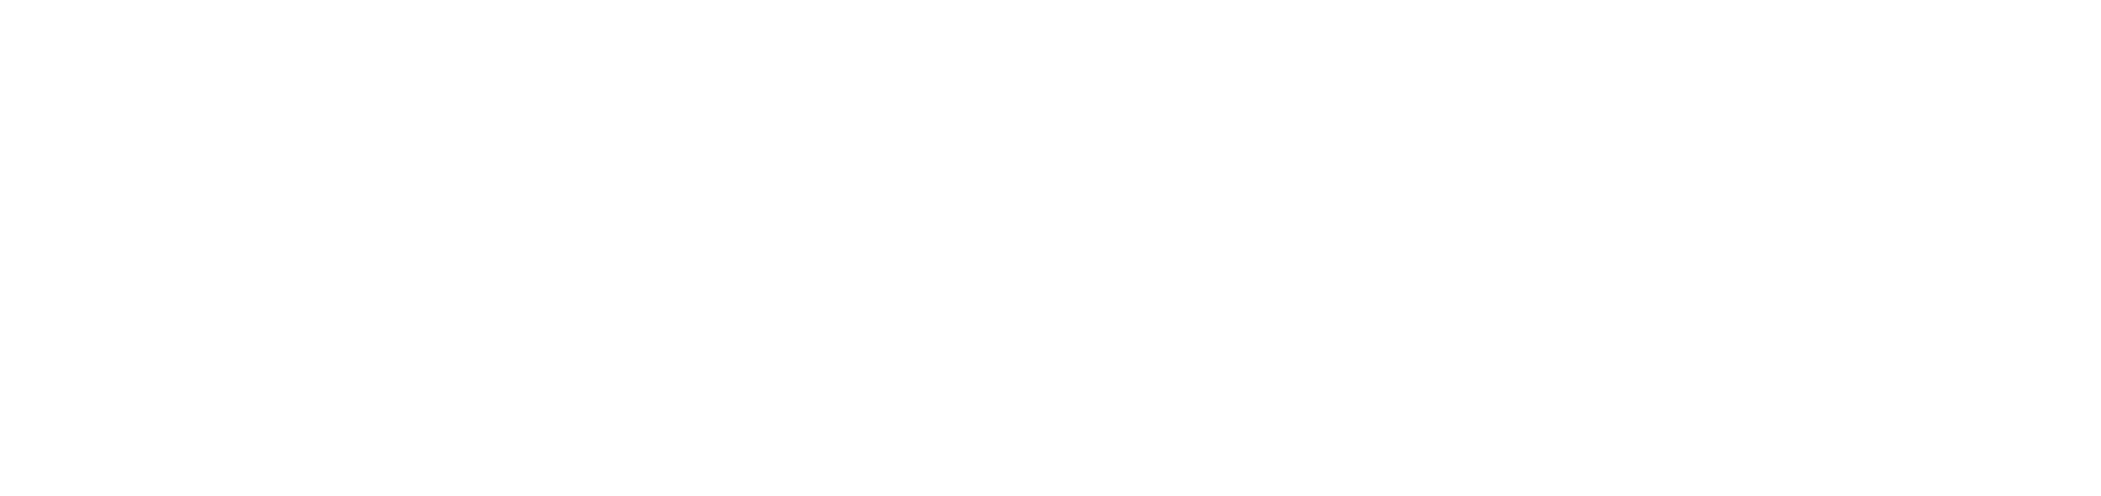 Thomas Foods Canada – Feeding Families Globally